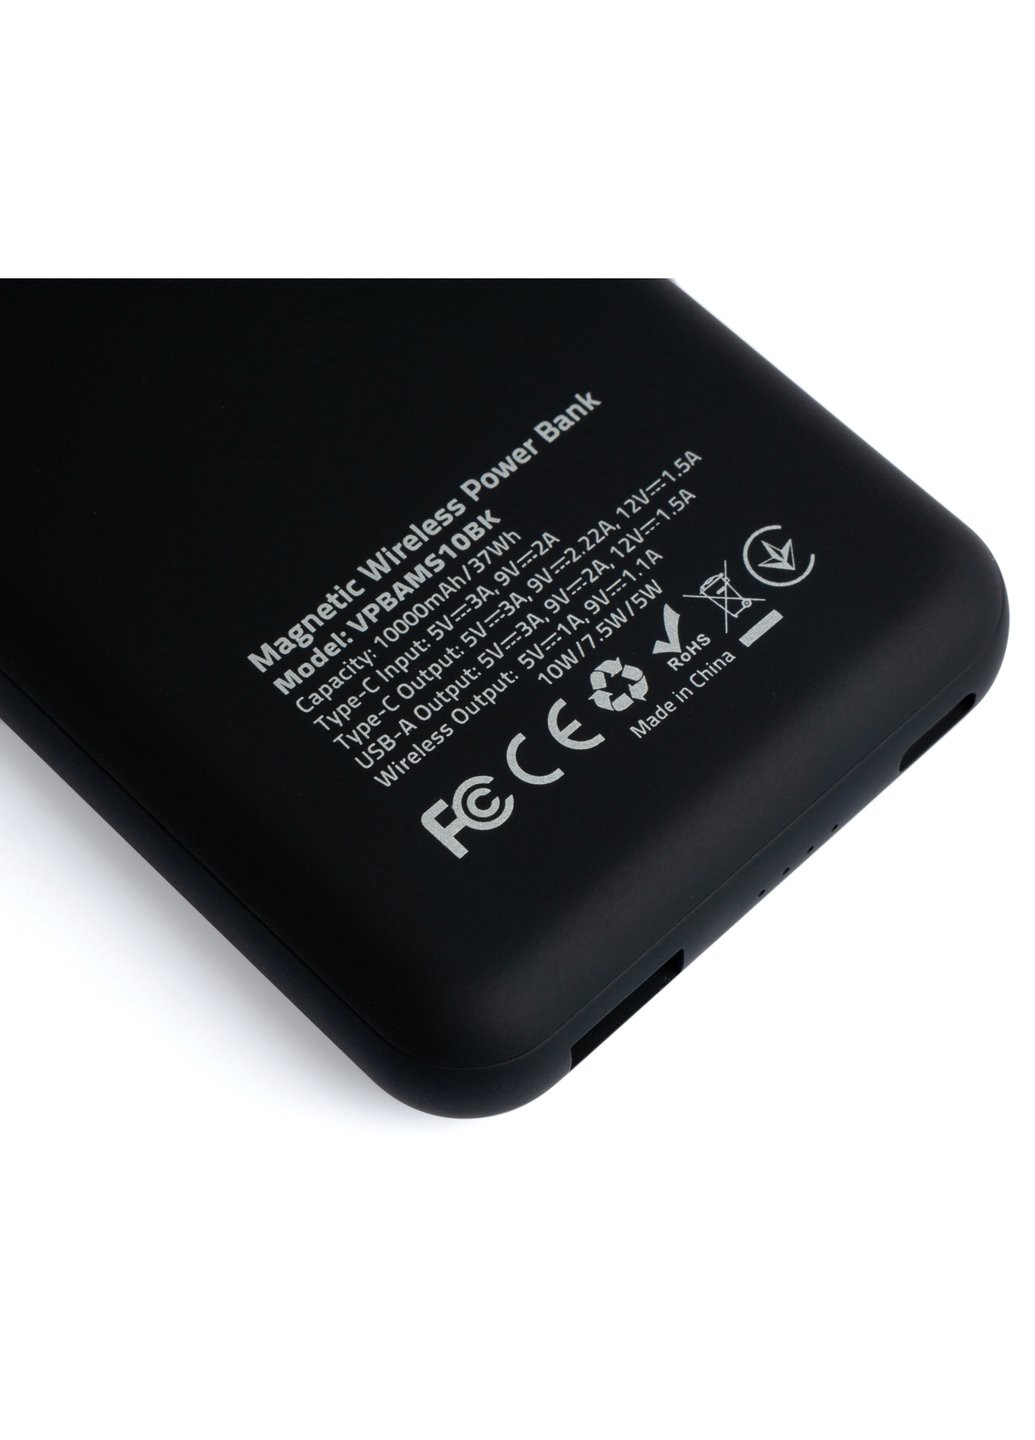 Батарея універсальна 10000 mAh Wireless Magnetic QC+PD (VPBAMS10BK) Vinga (257225216)